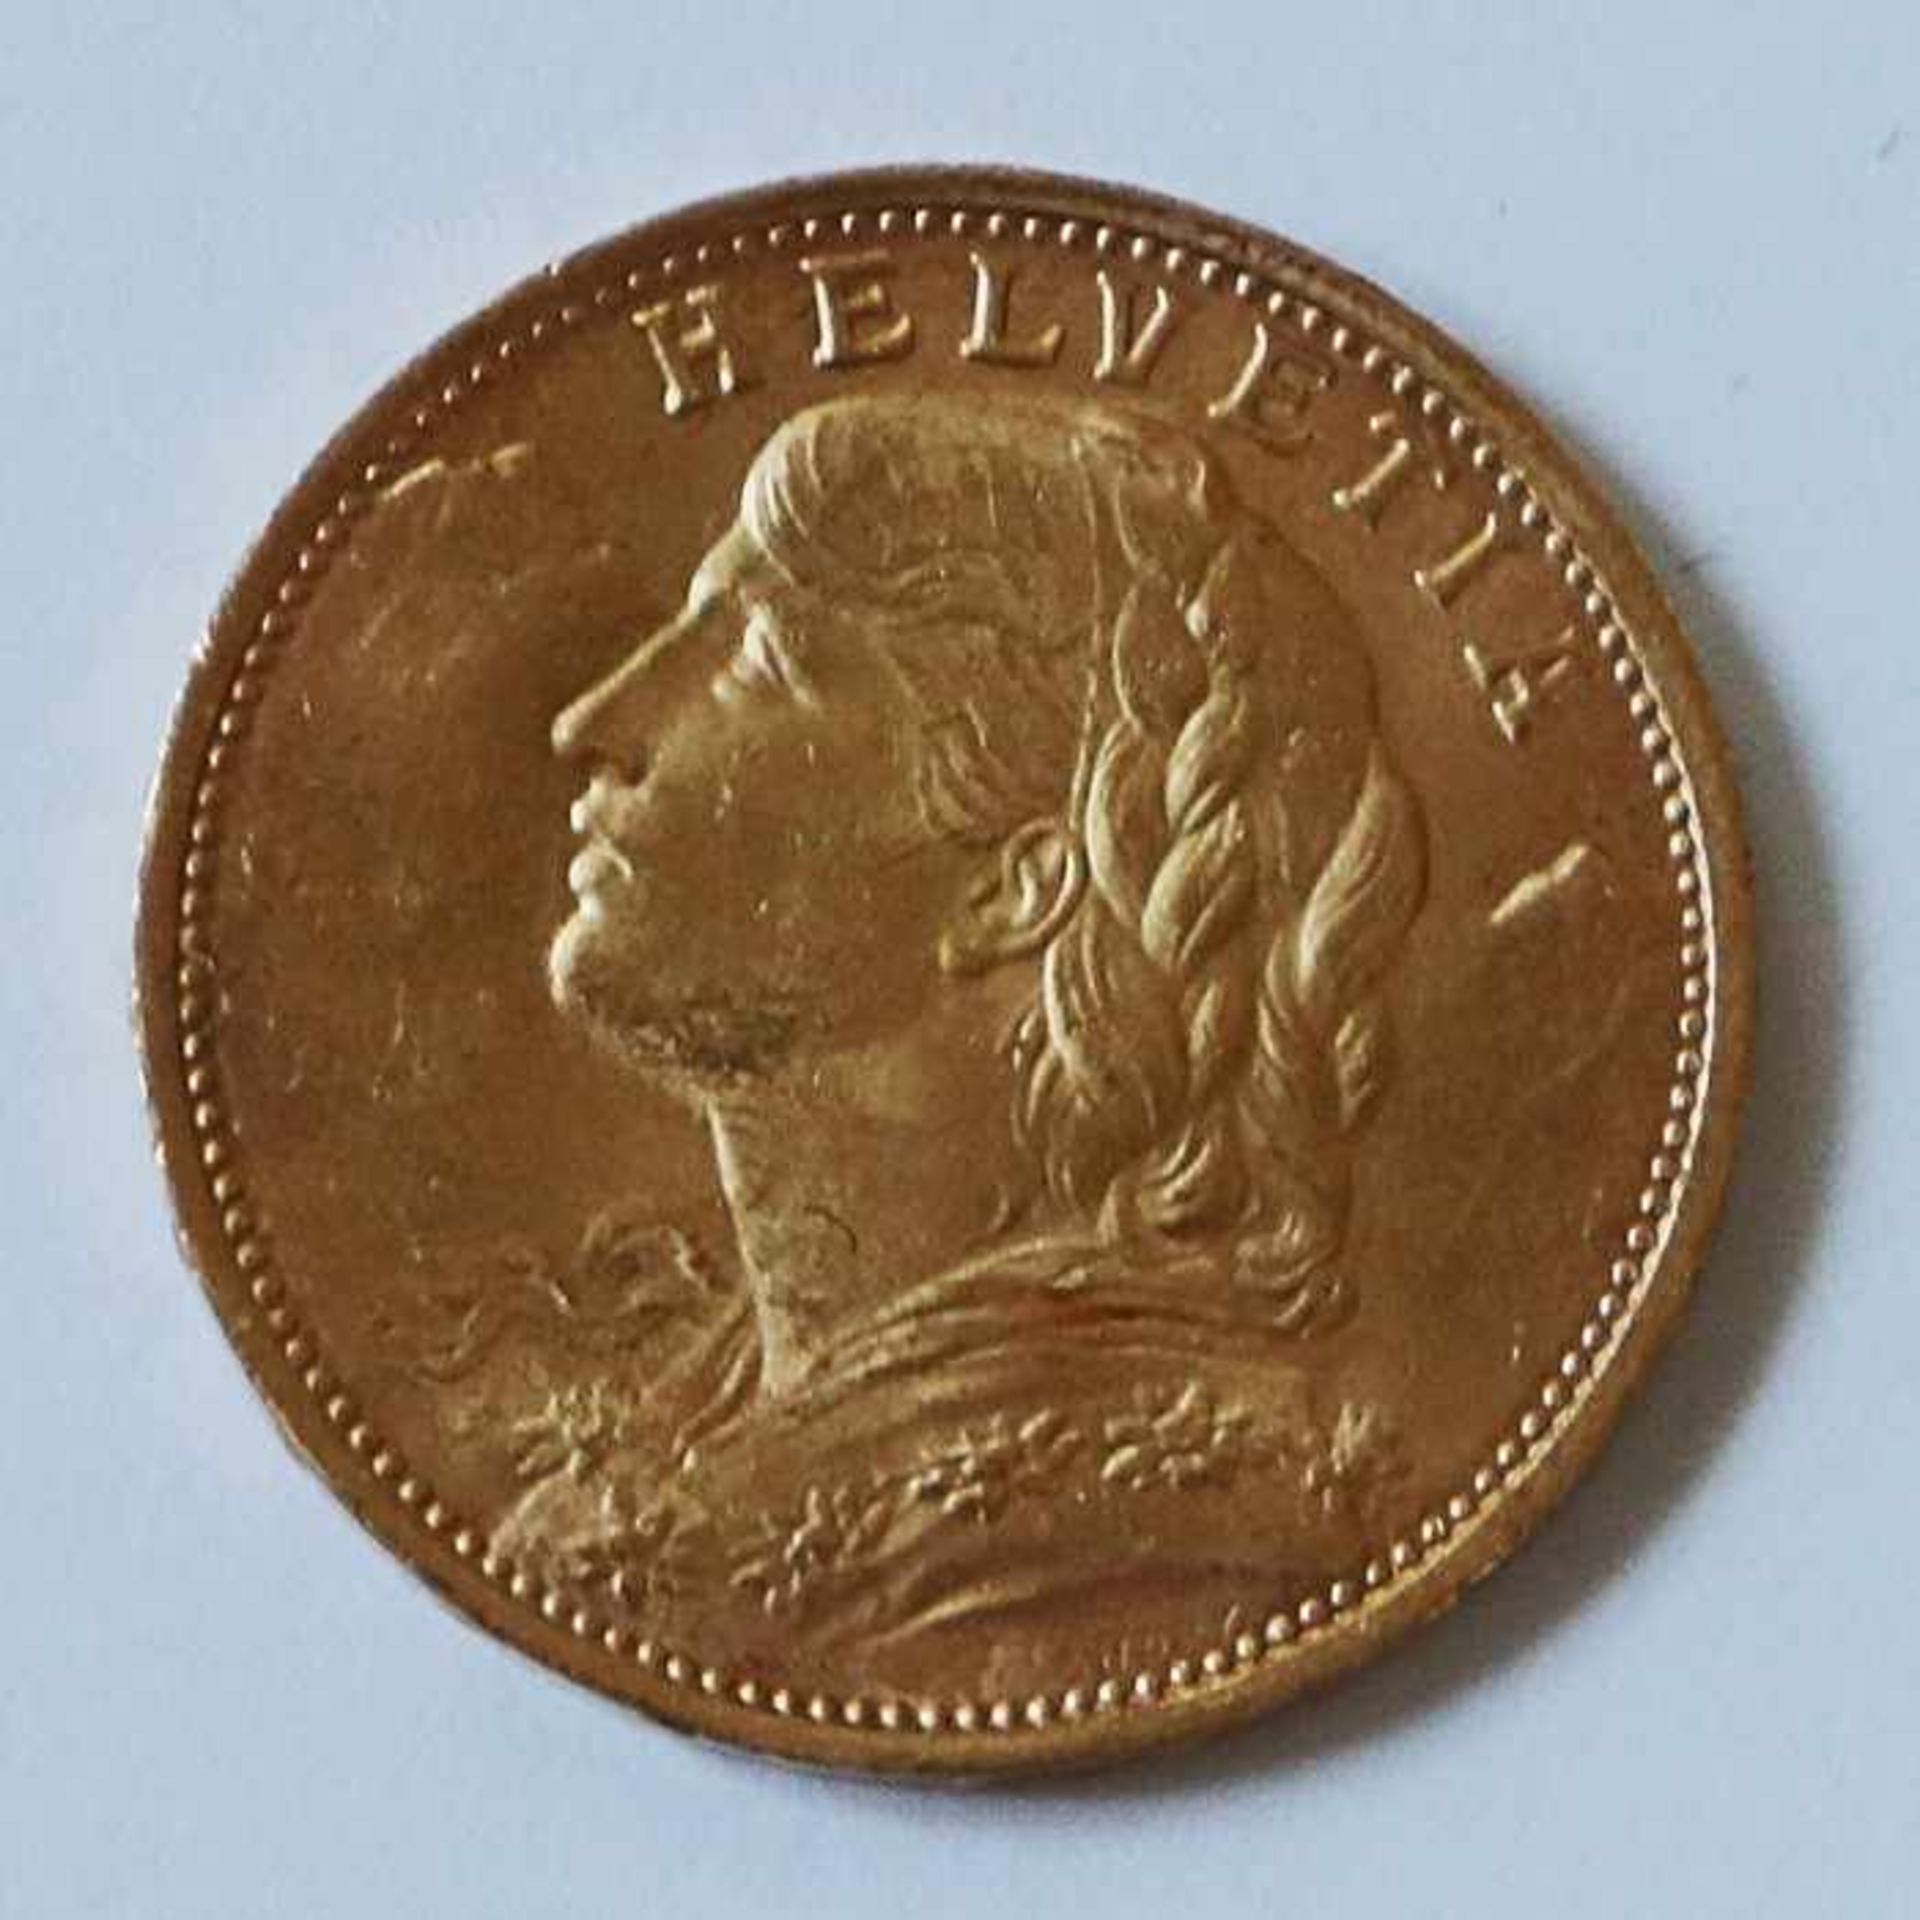 Gold - Schweiz 20 Franken 1935Schweizer Vreneli, LB, D 21mm, G 6,45g, vz - Bild 2 aus 4